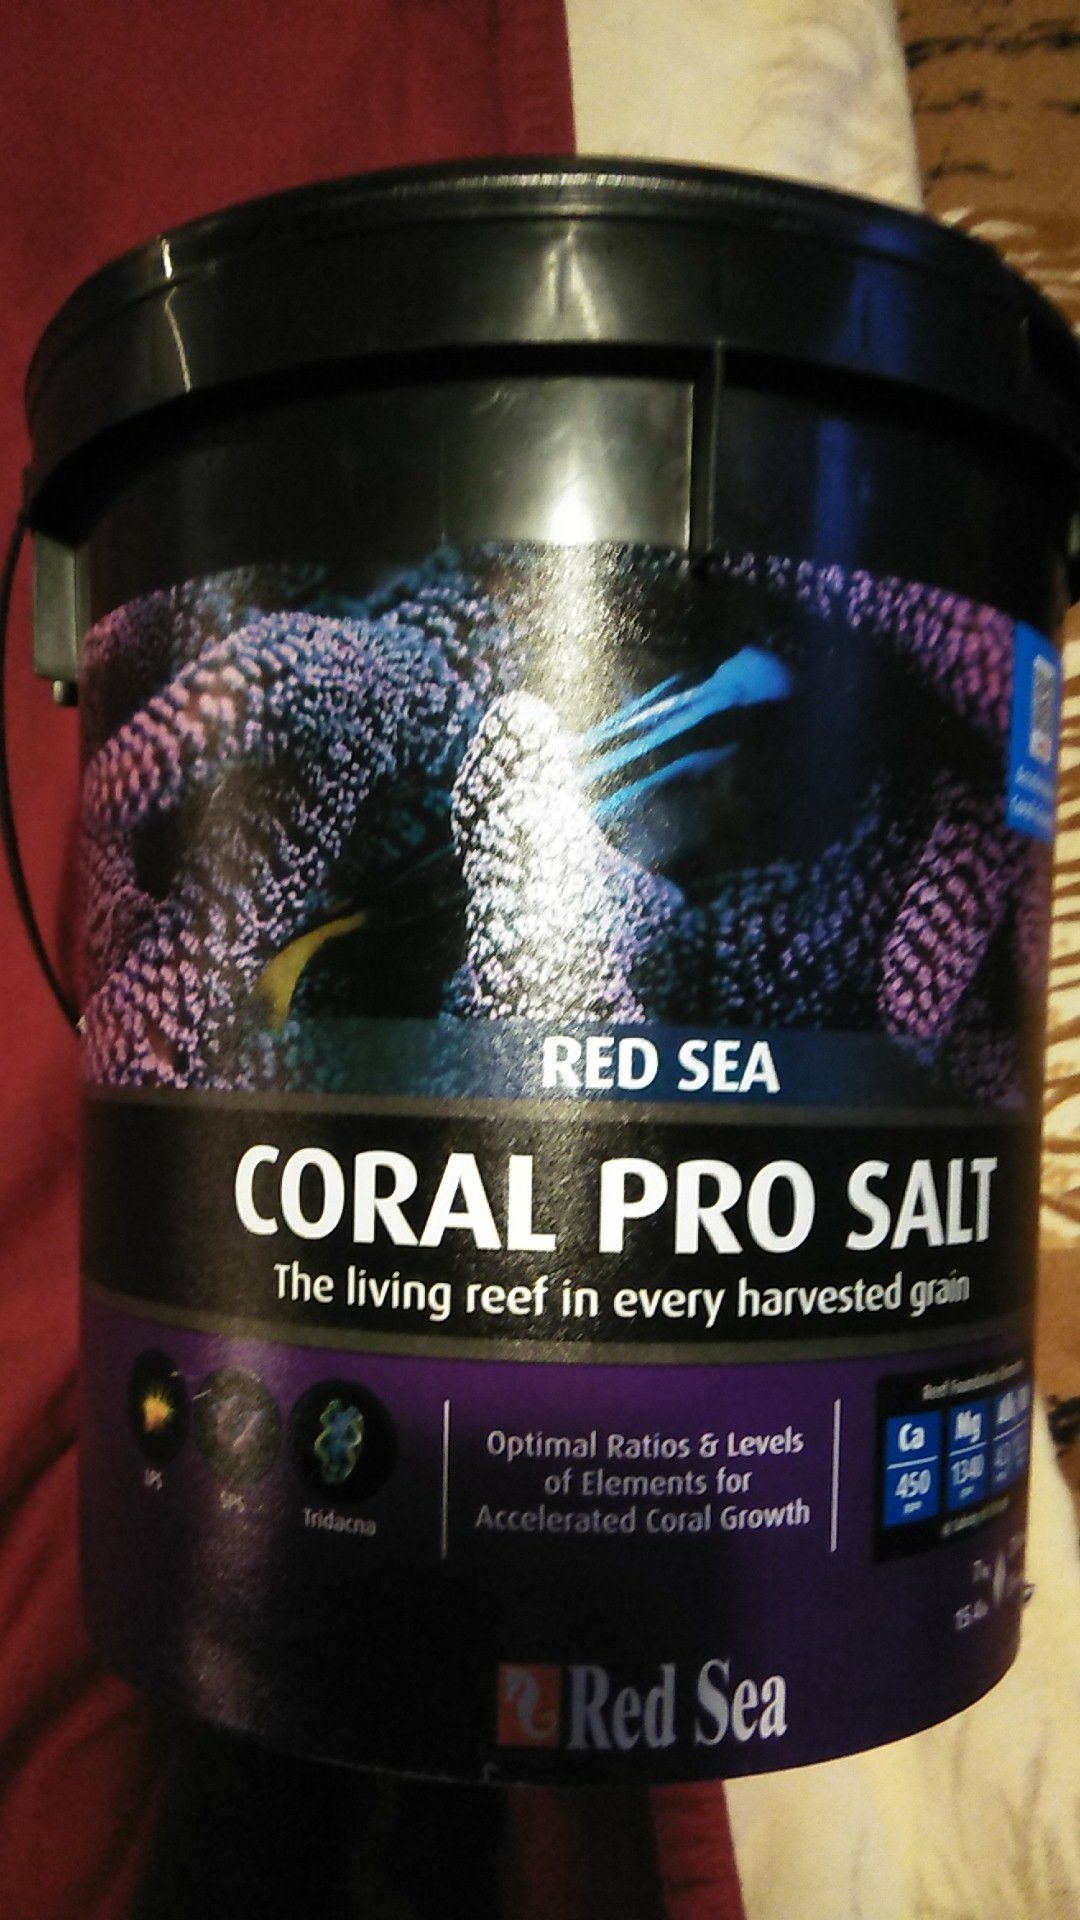 Red sea coral pro salt